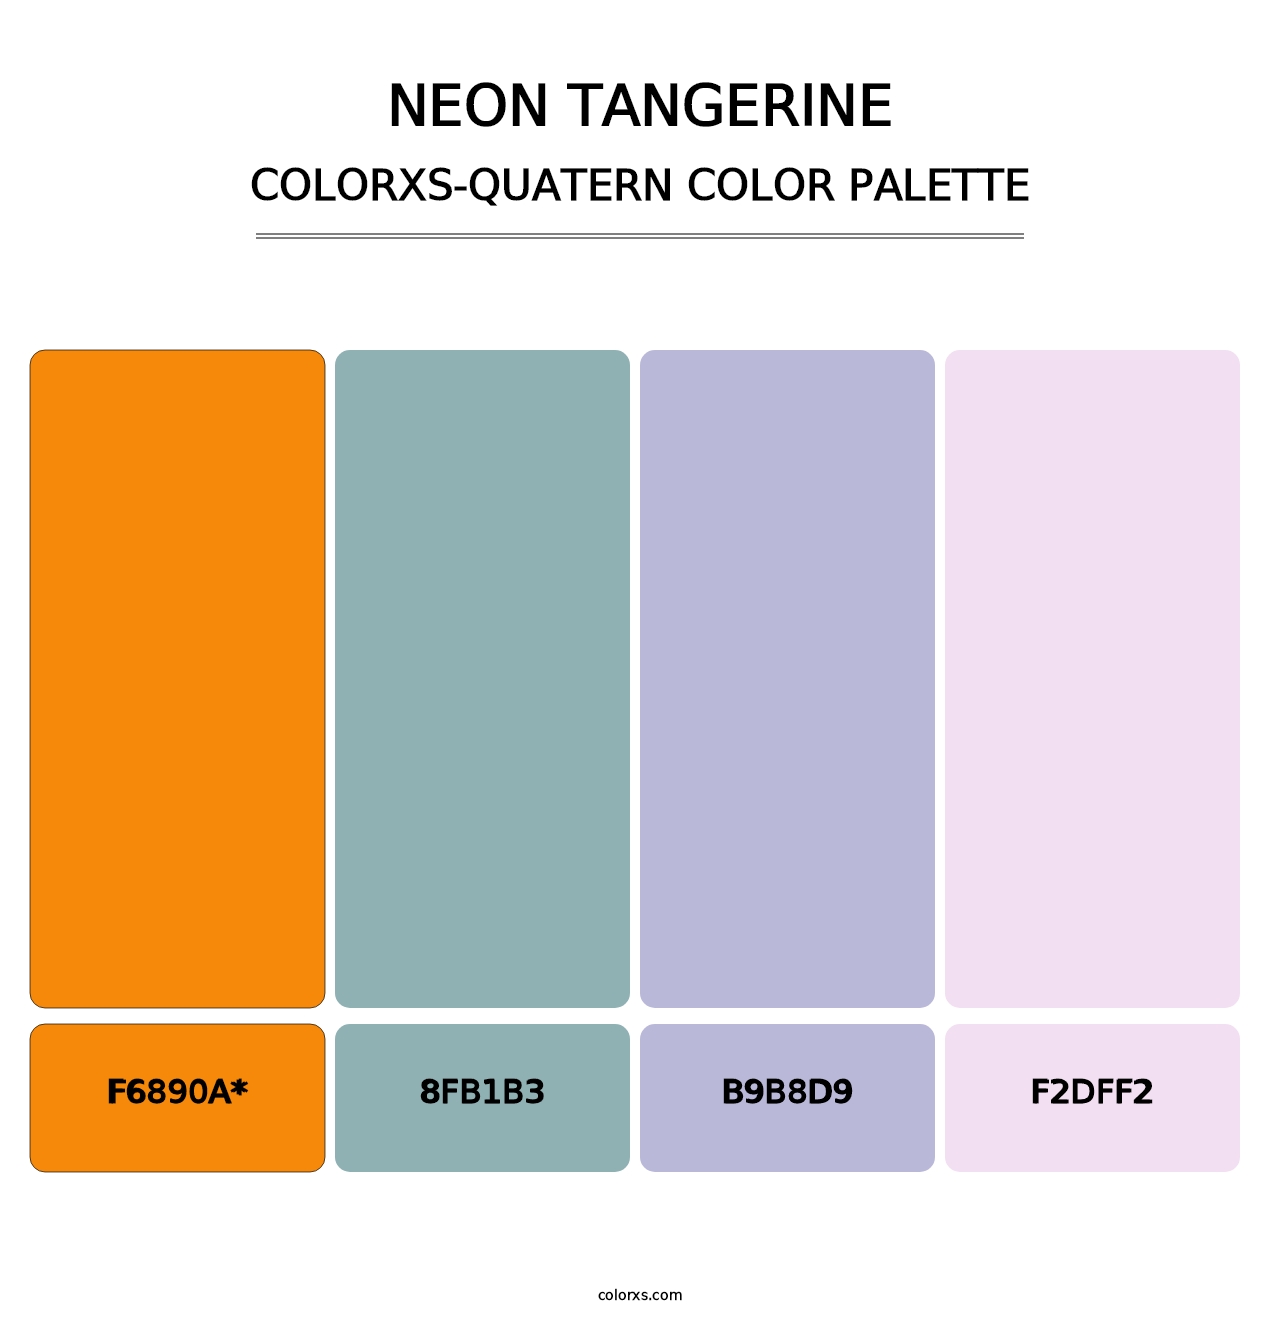 Neon Tangerine - Colorxs Quatern Palette